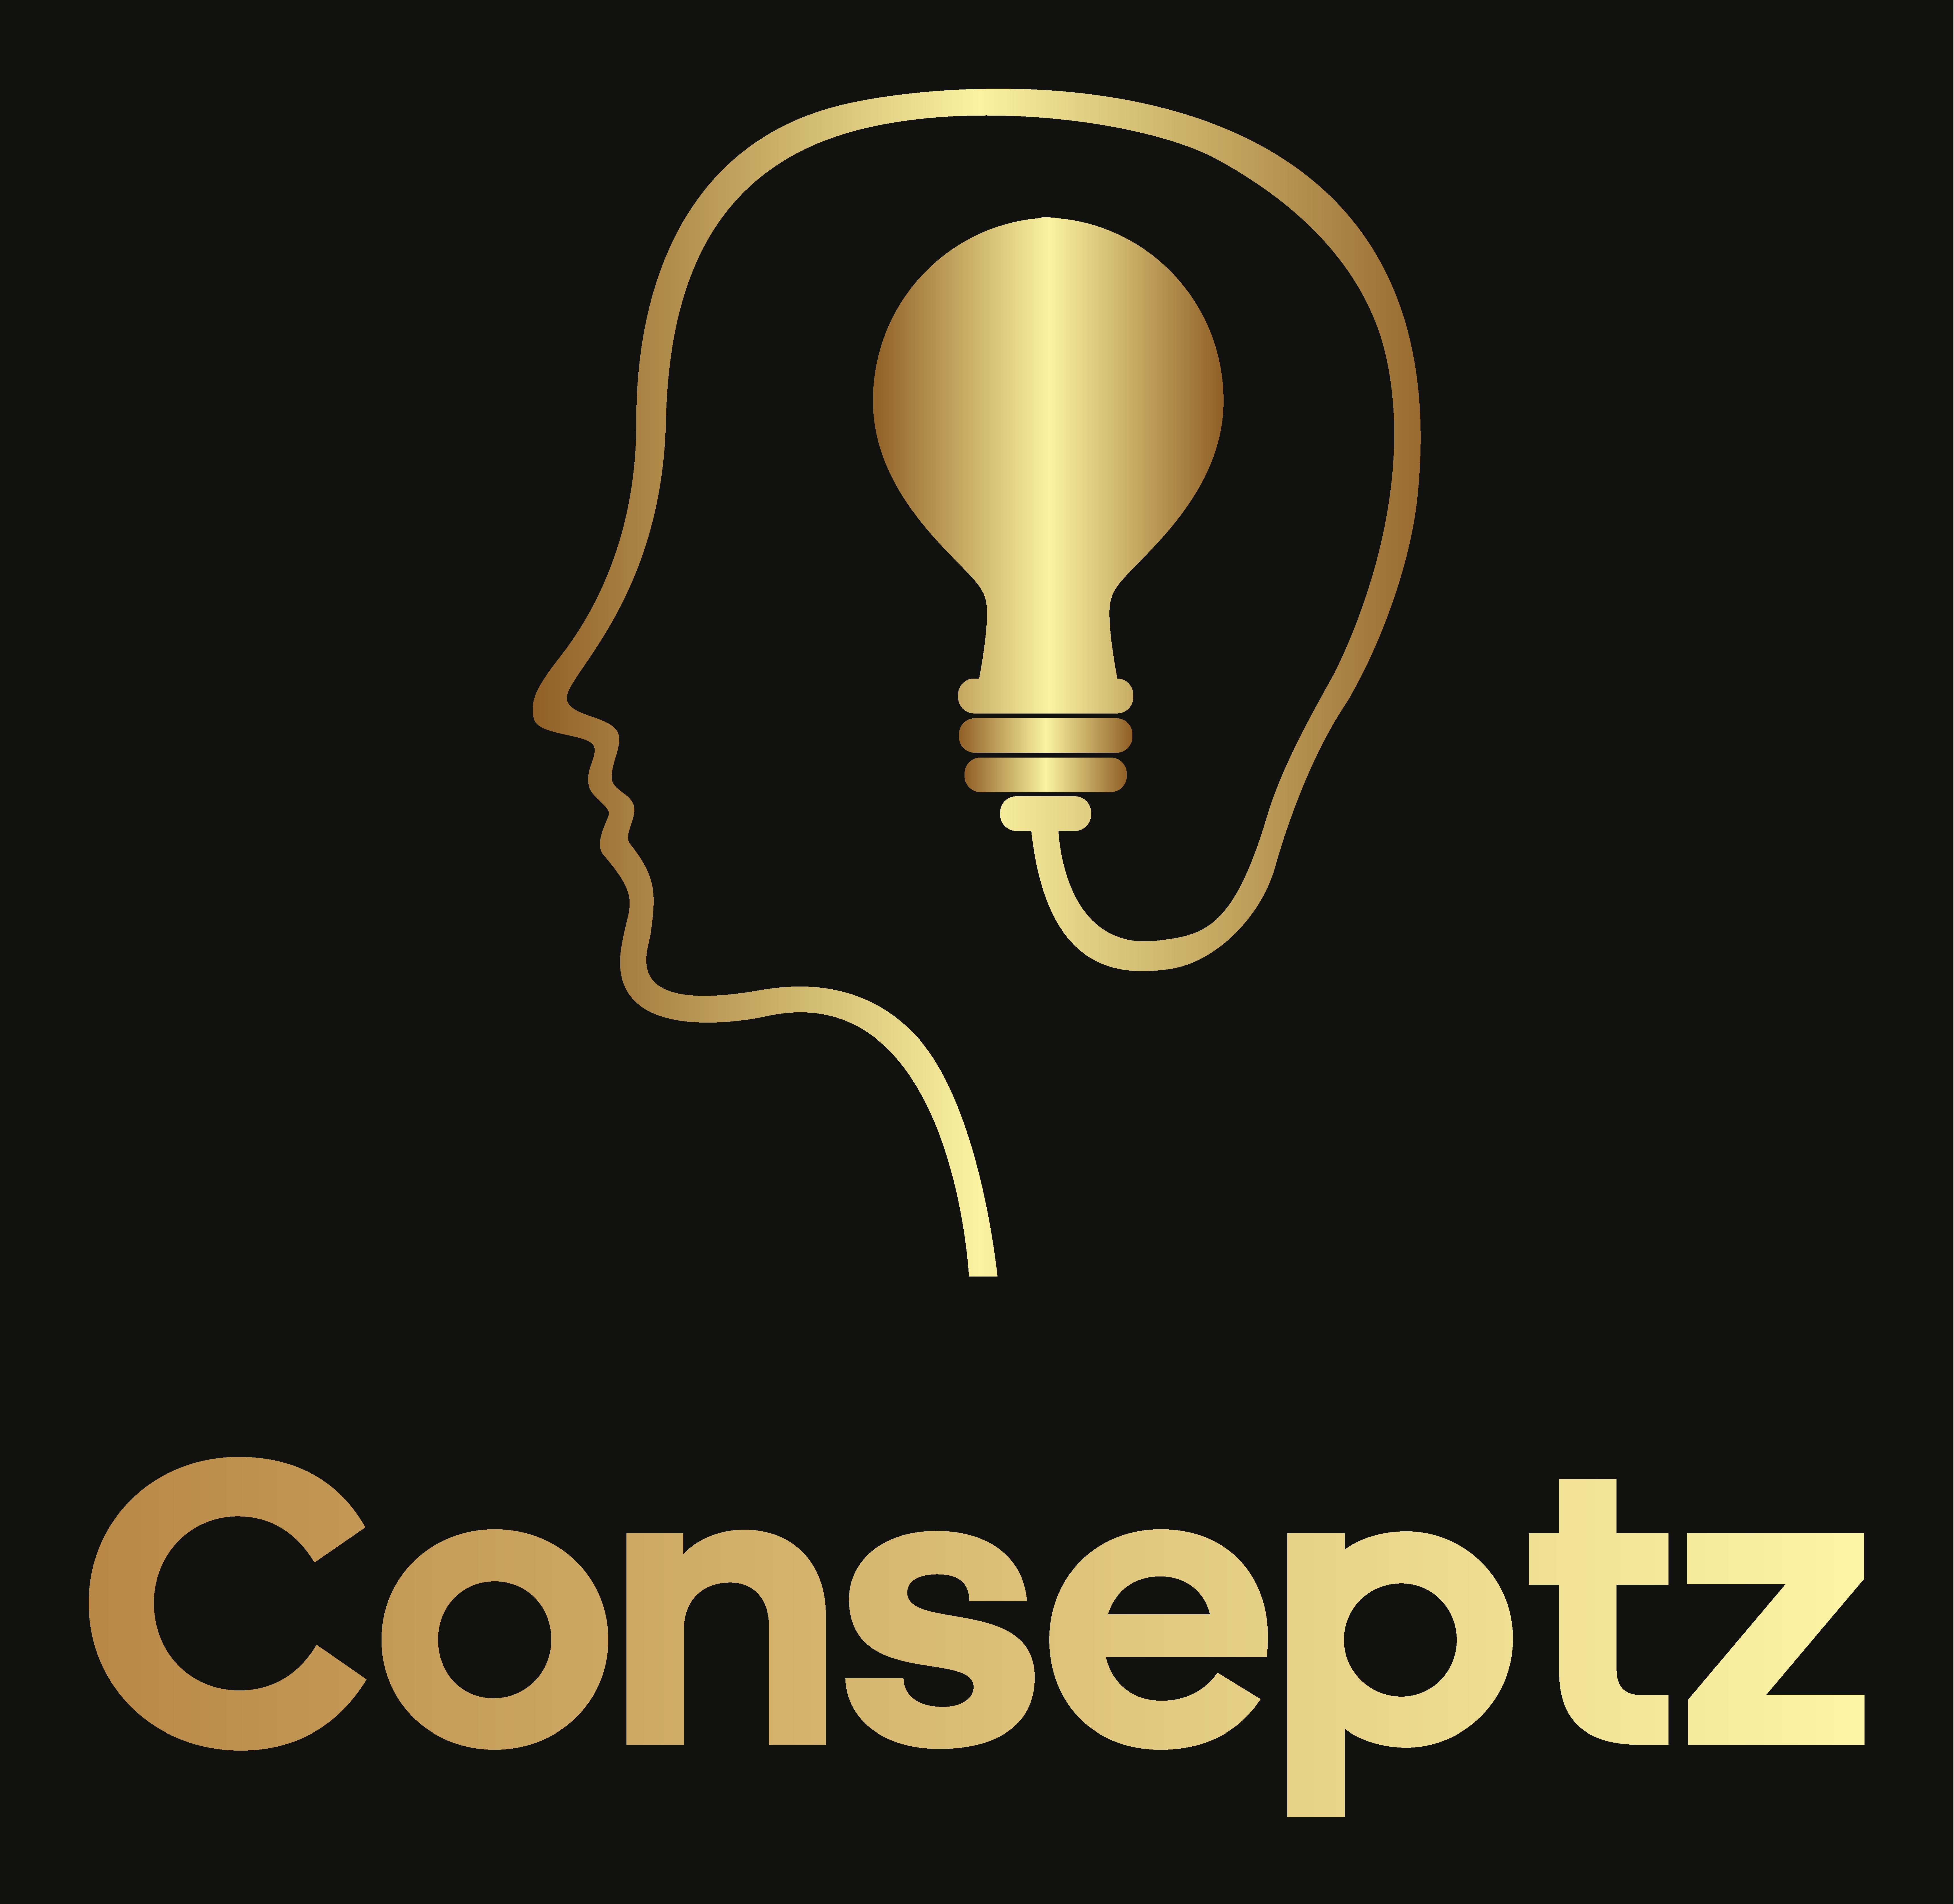 Conseptz's logo